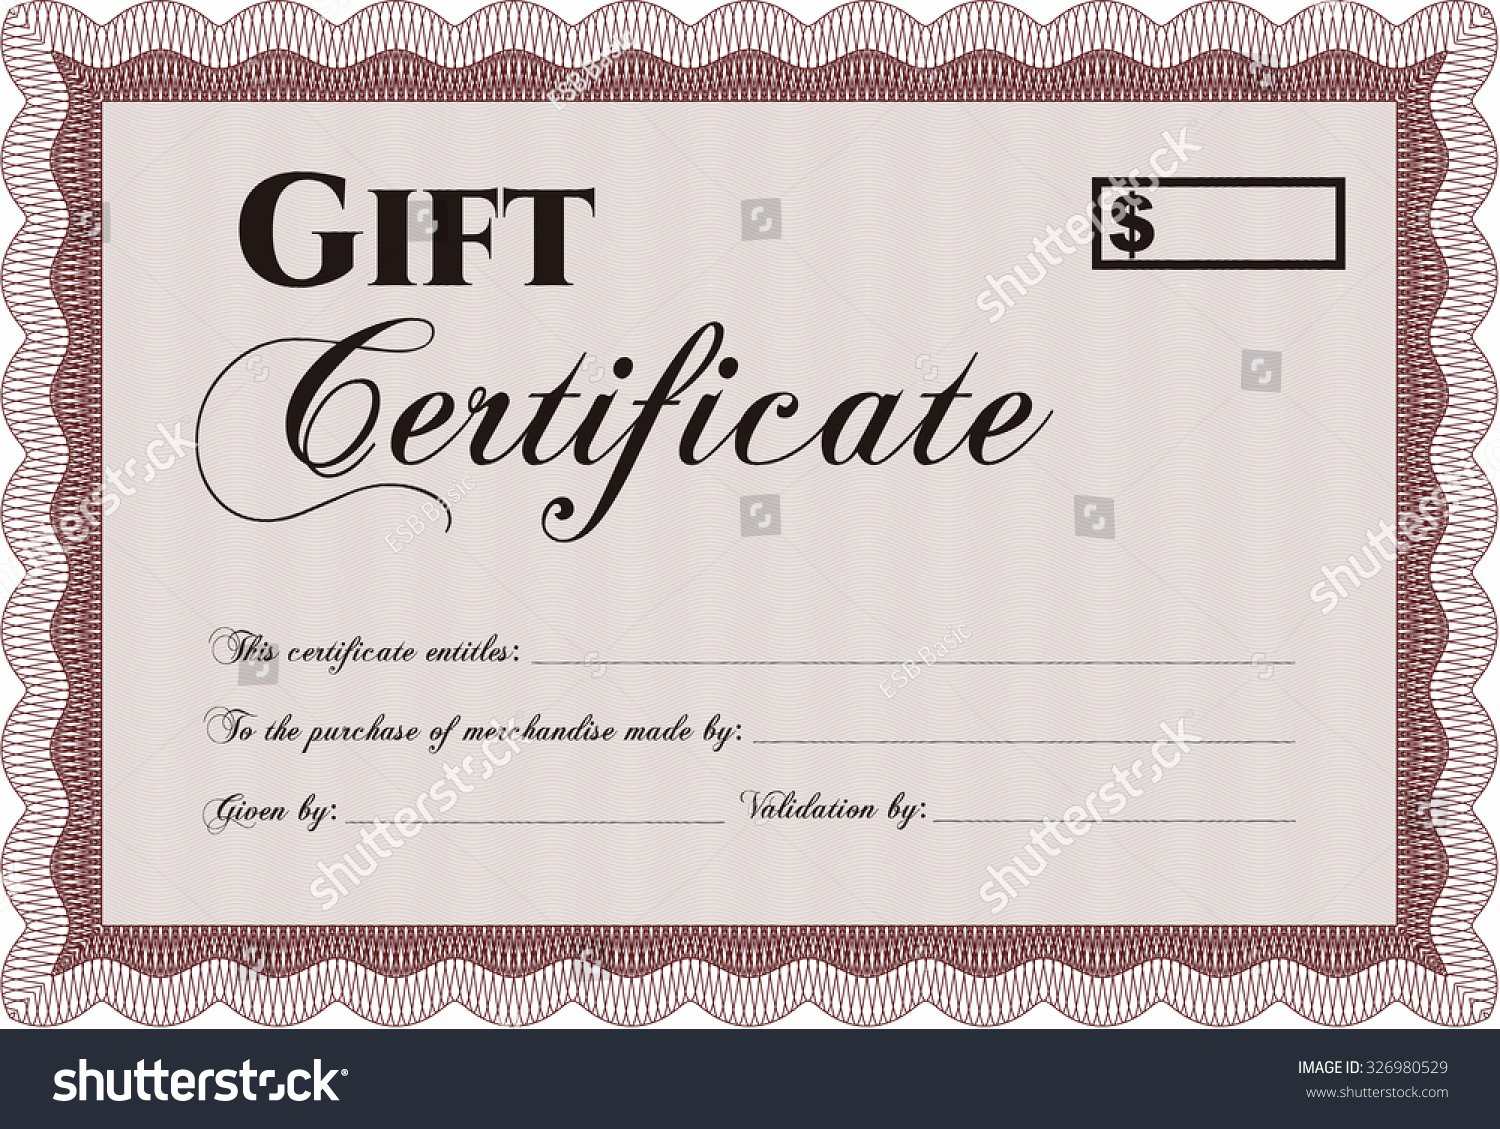 Simple Gift Certificate Template Beautiful Gift Certificate Template Easy to Print Customizable